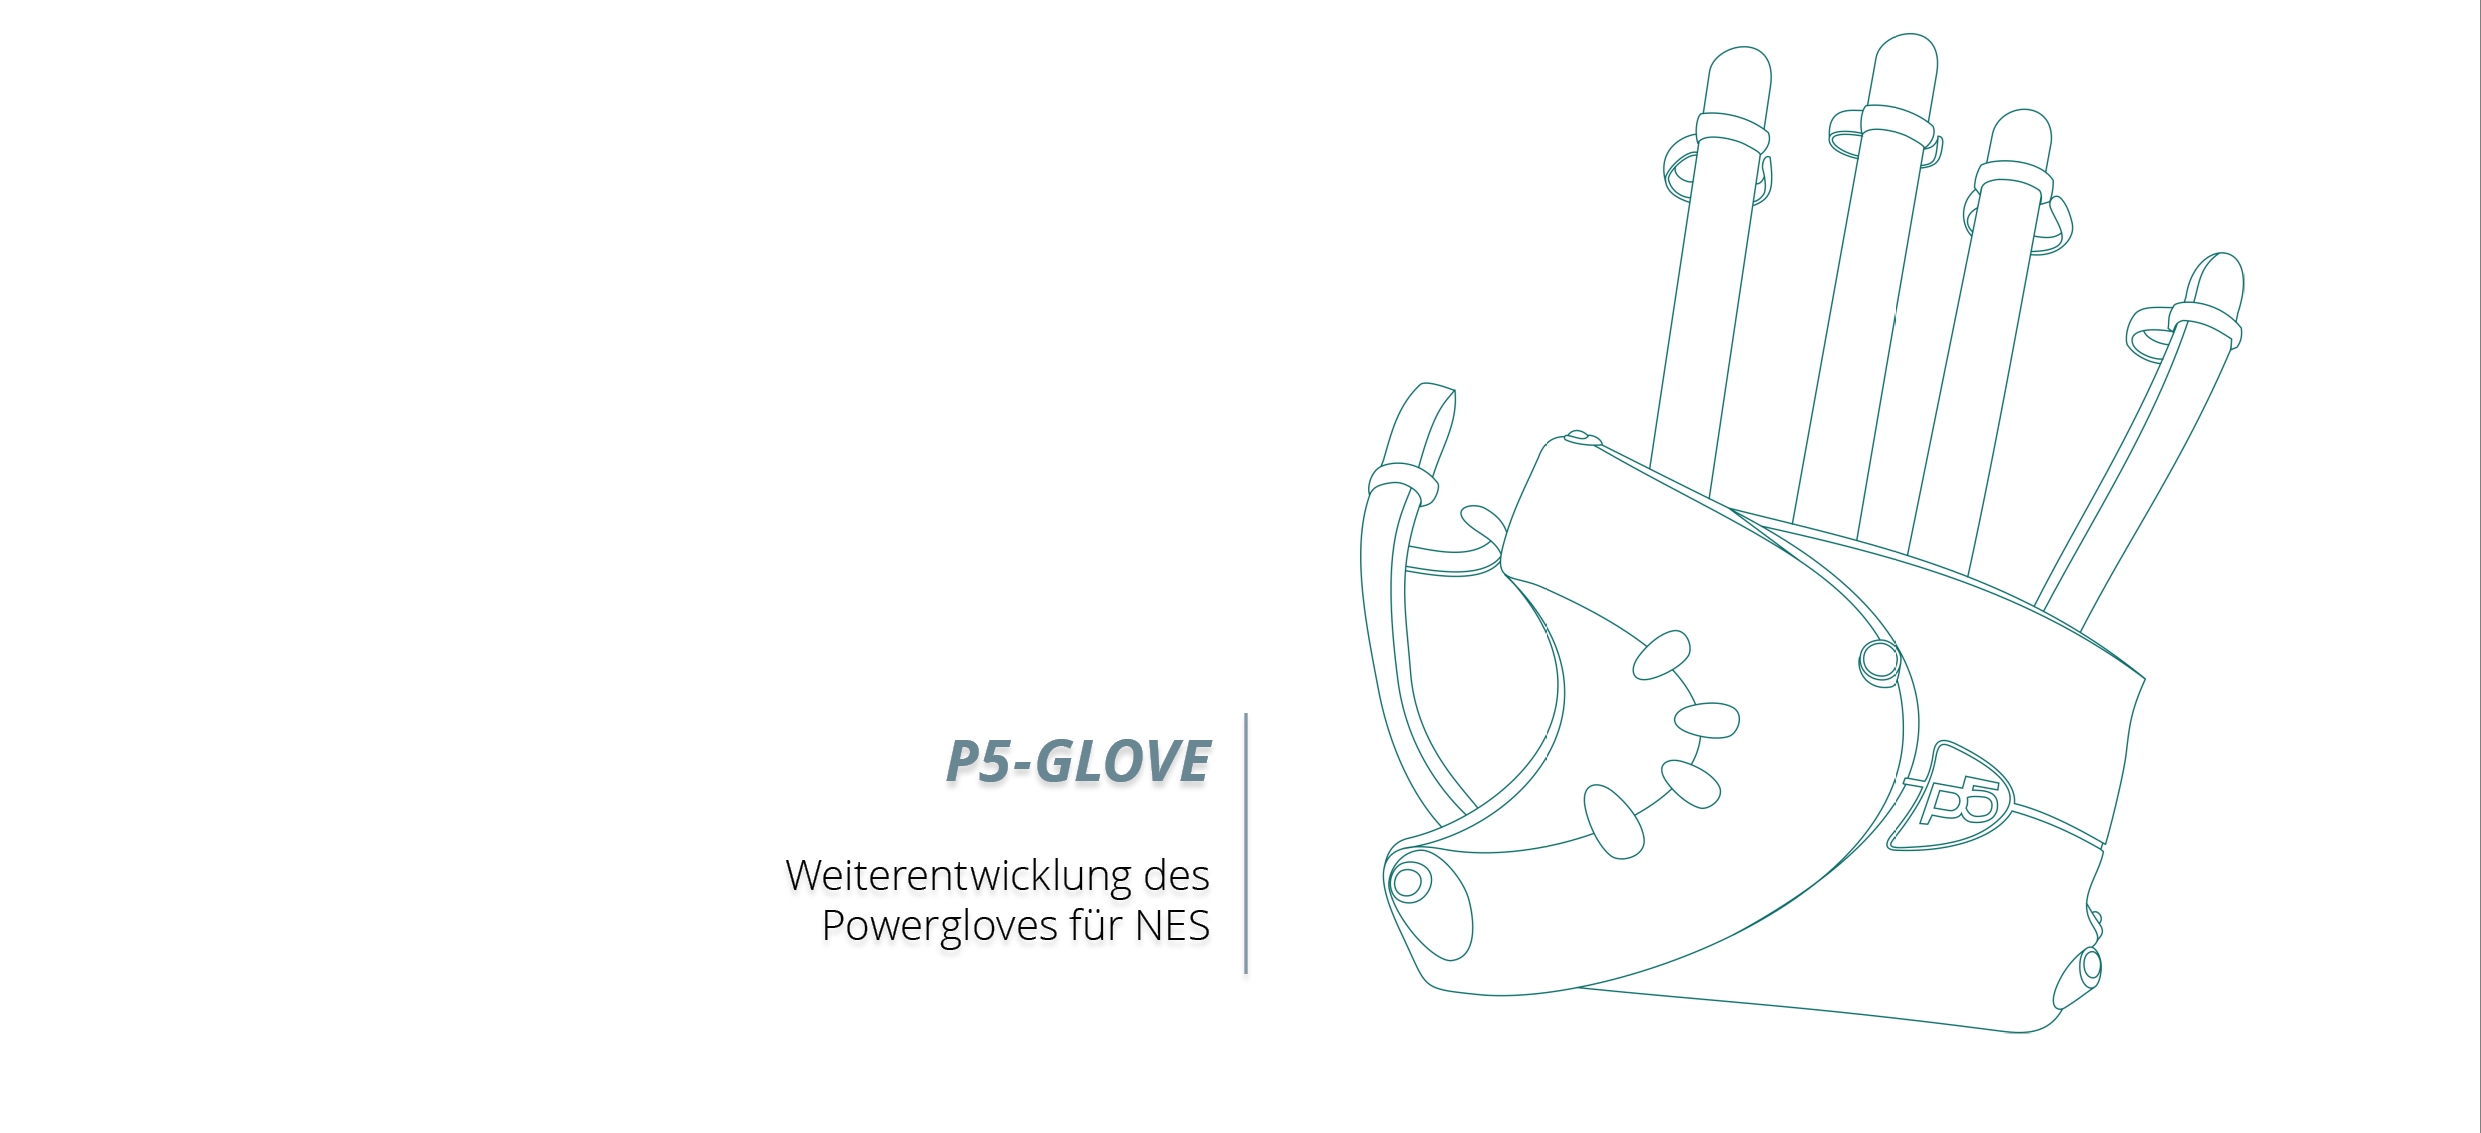 Dataglove Illustration P5 Glove